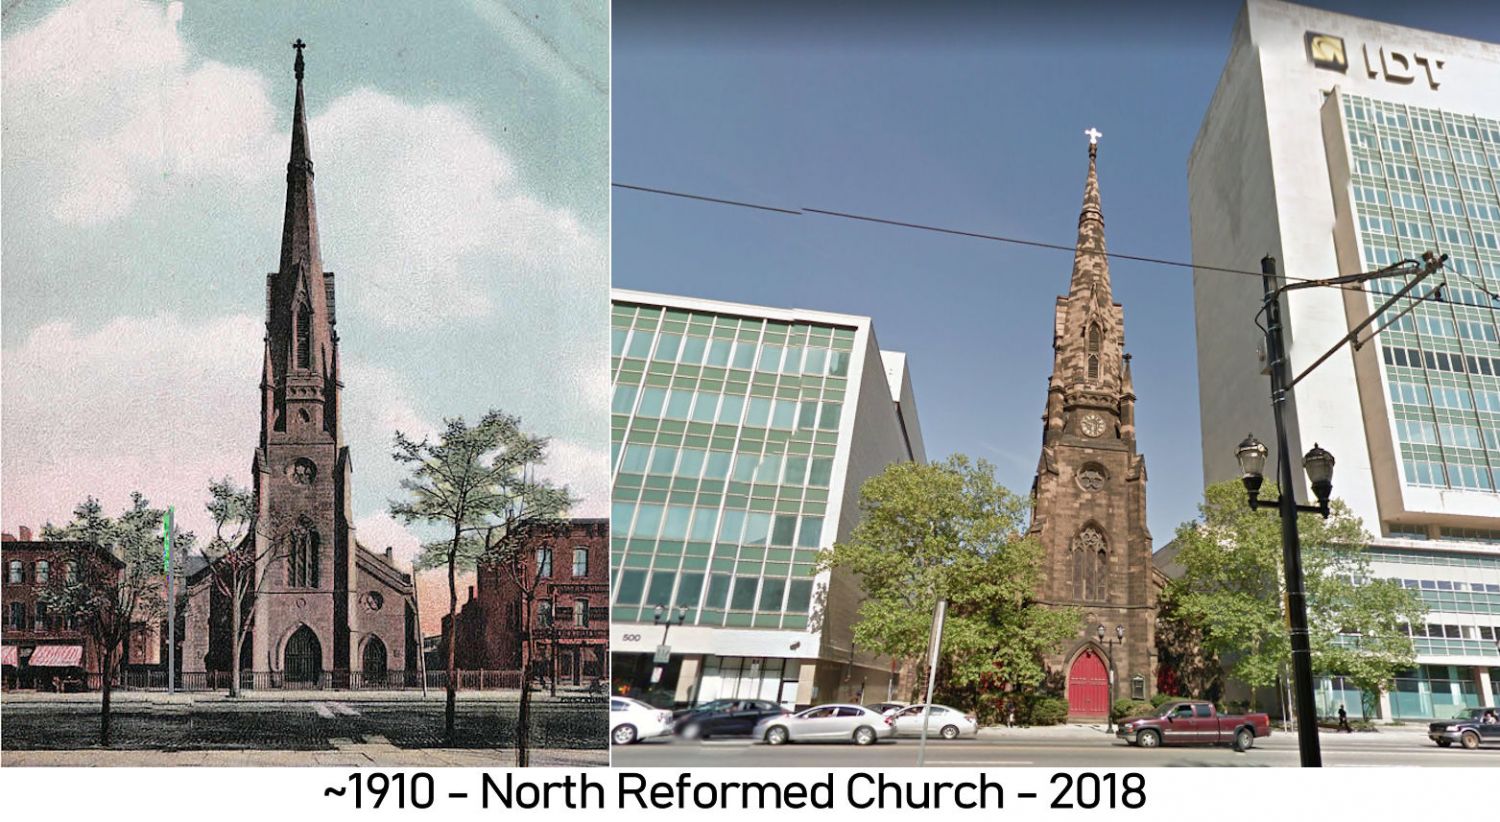 North Reformed Church
